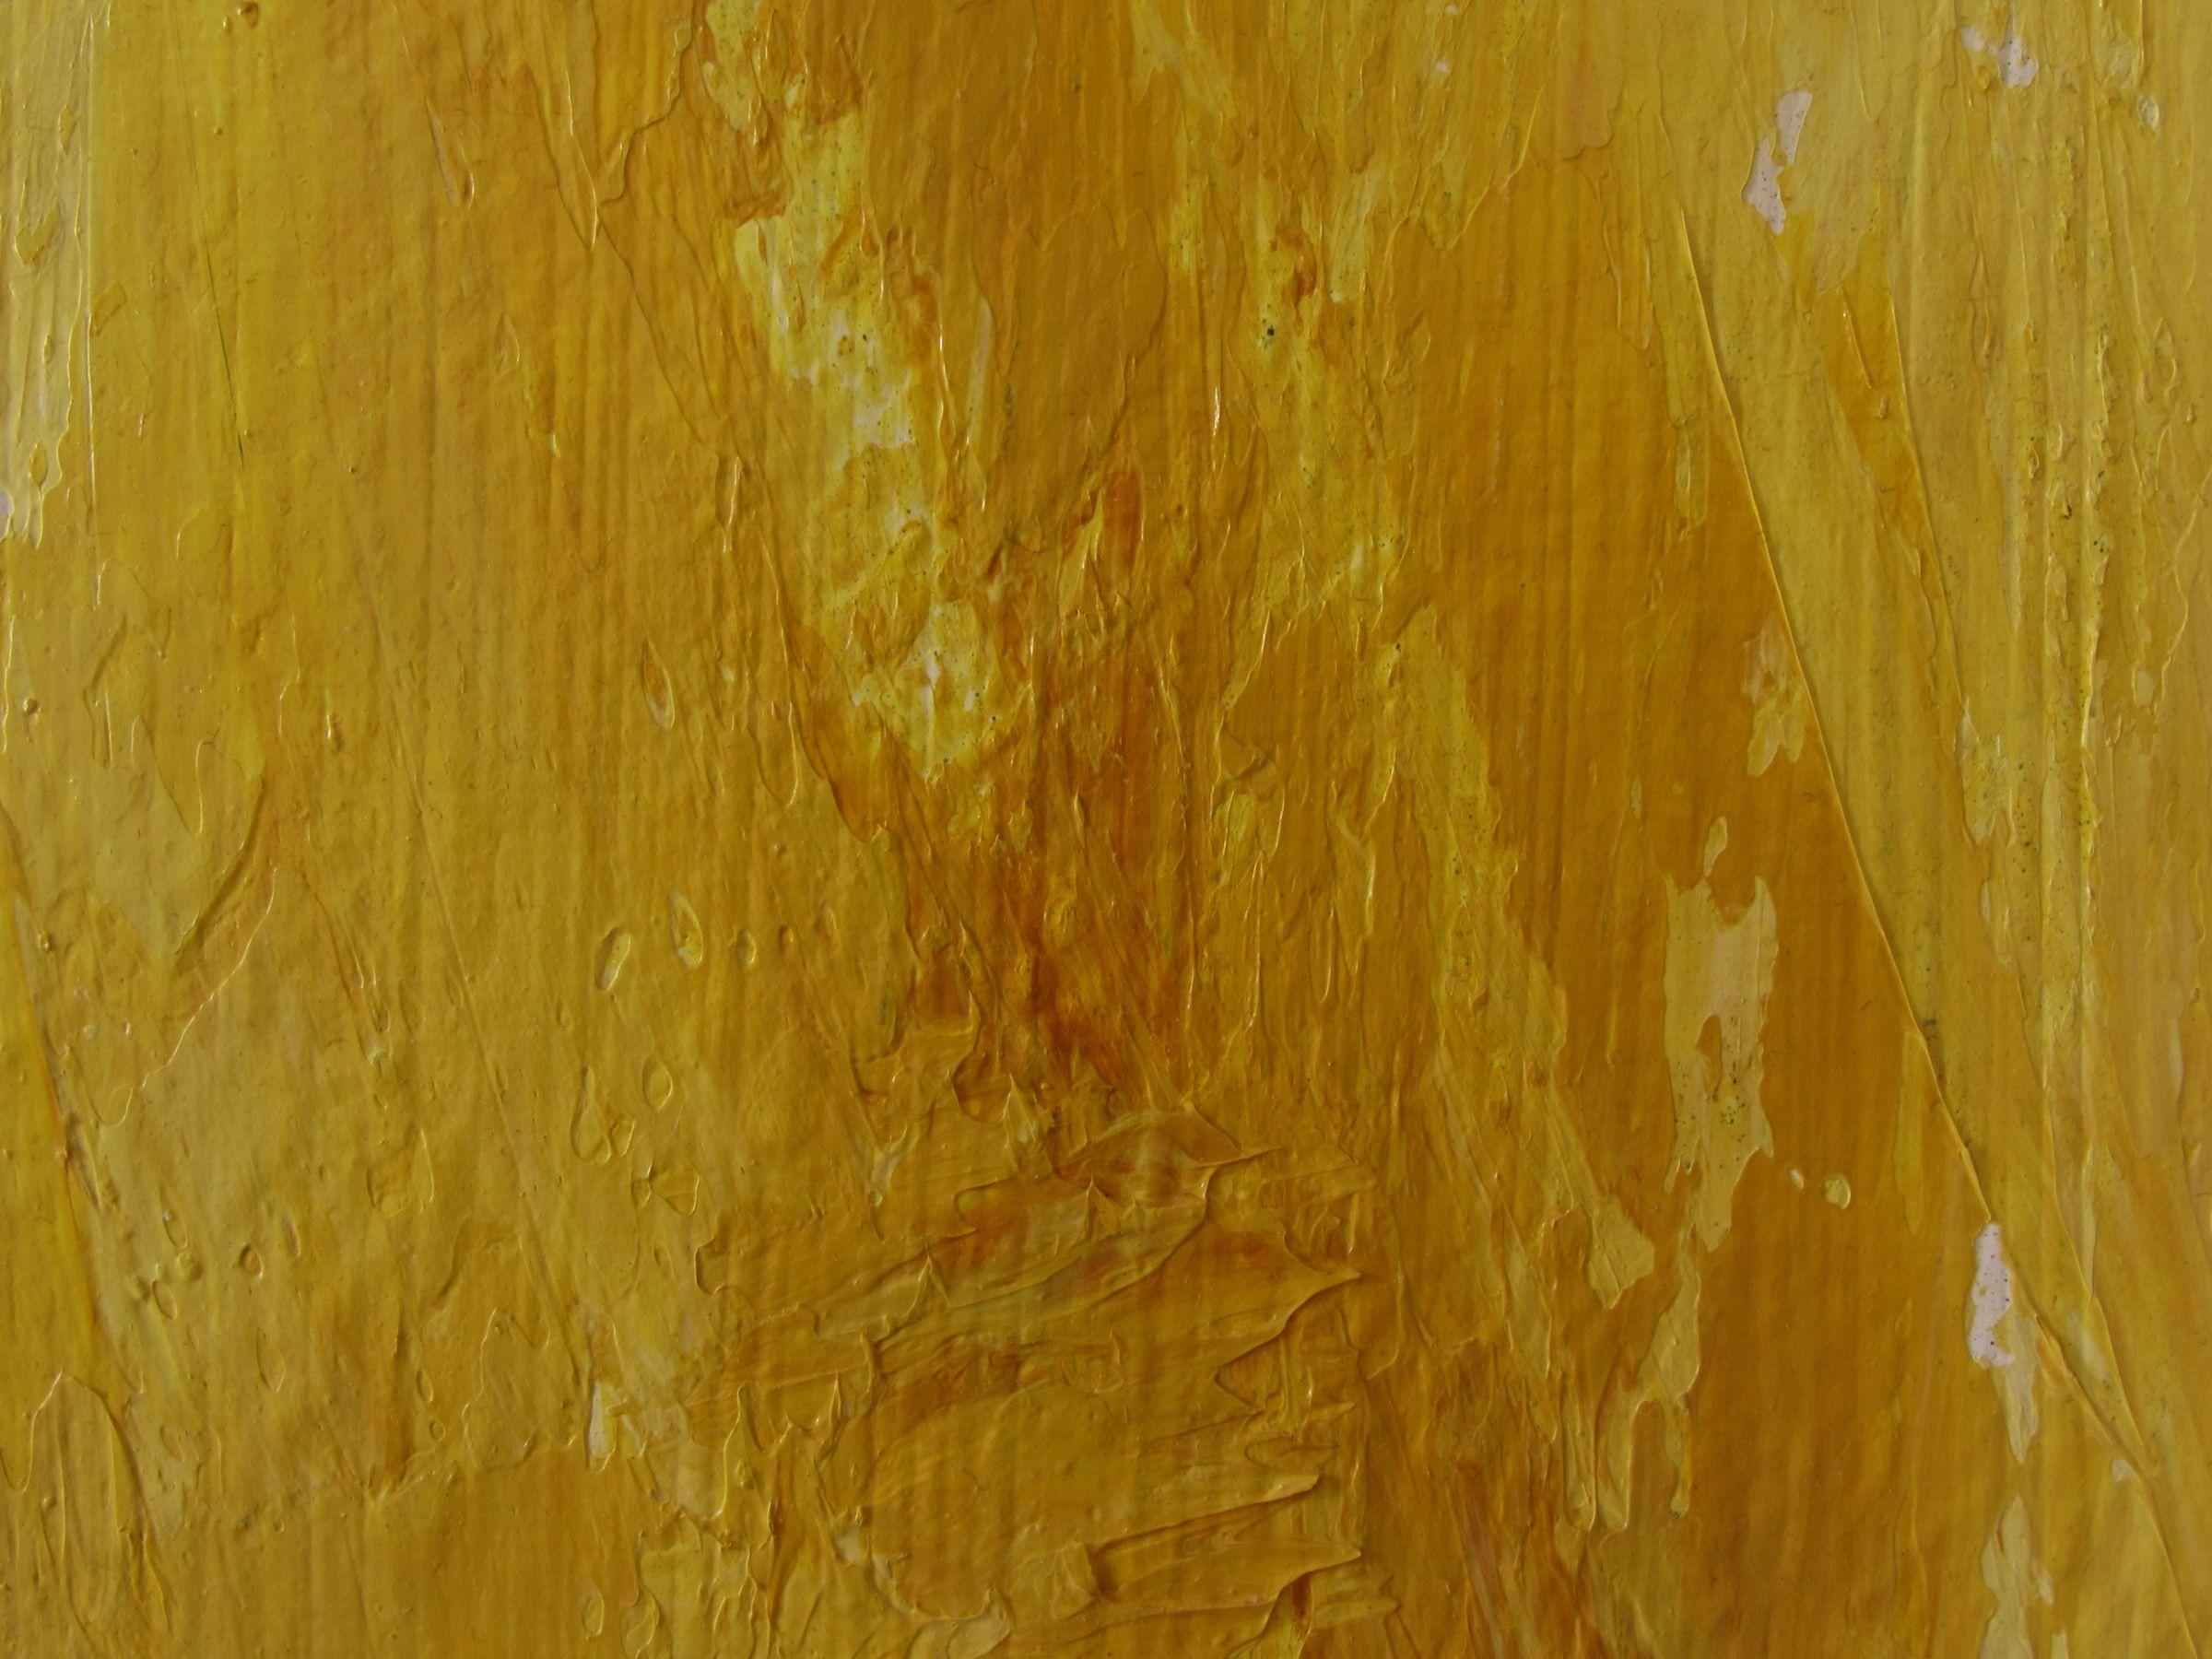 Nightflower, Painting, Acrylic on Wood Panel 4